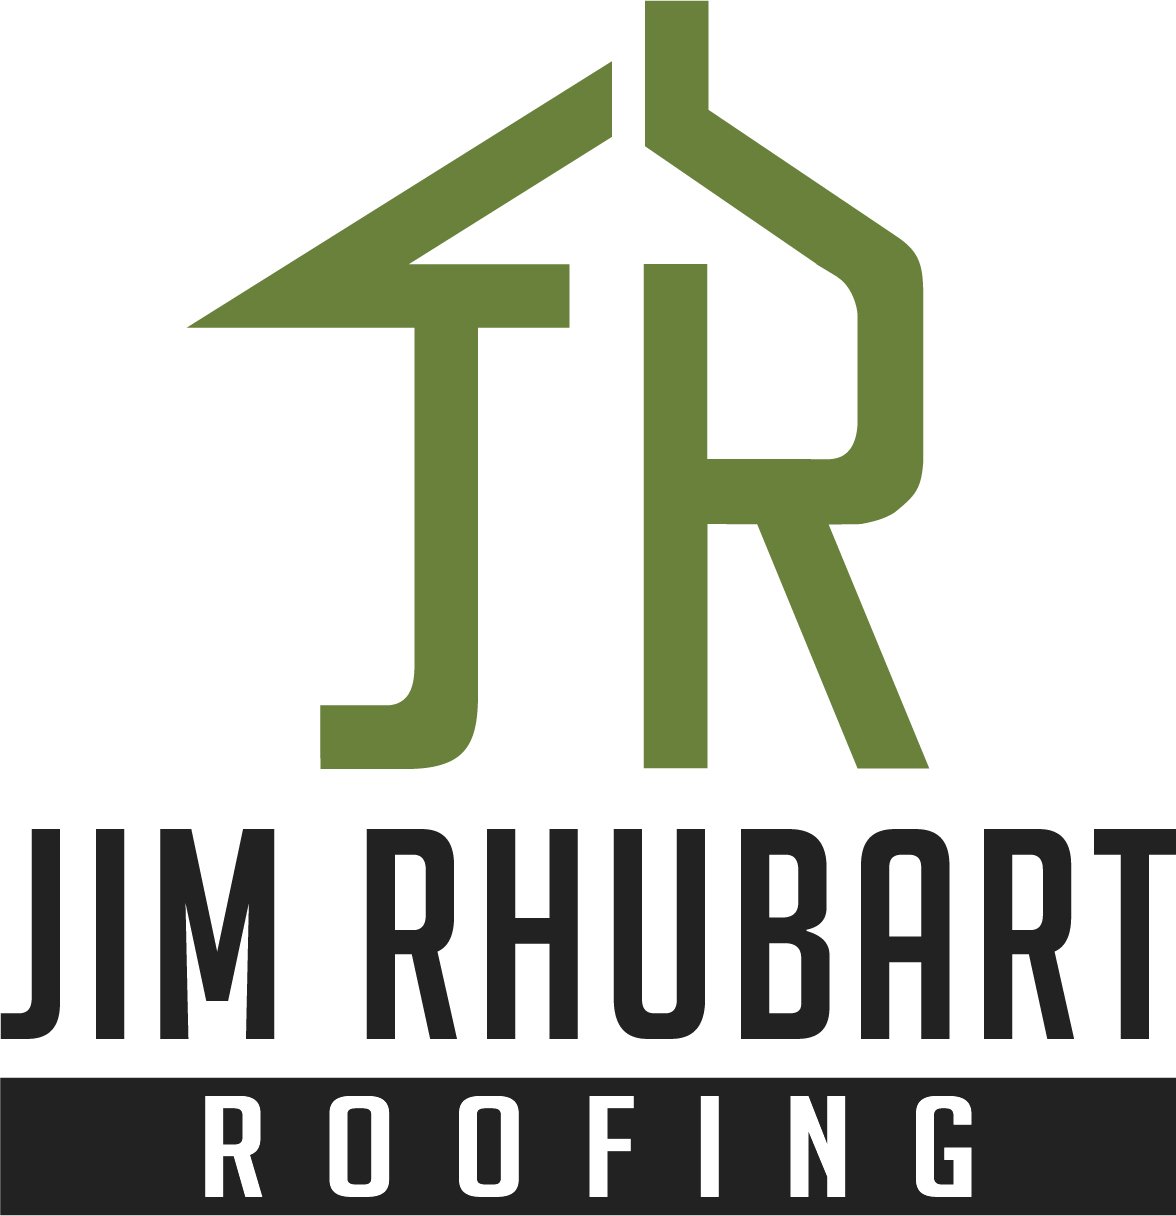 Jim Rhubart Roofing Logo